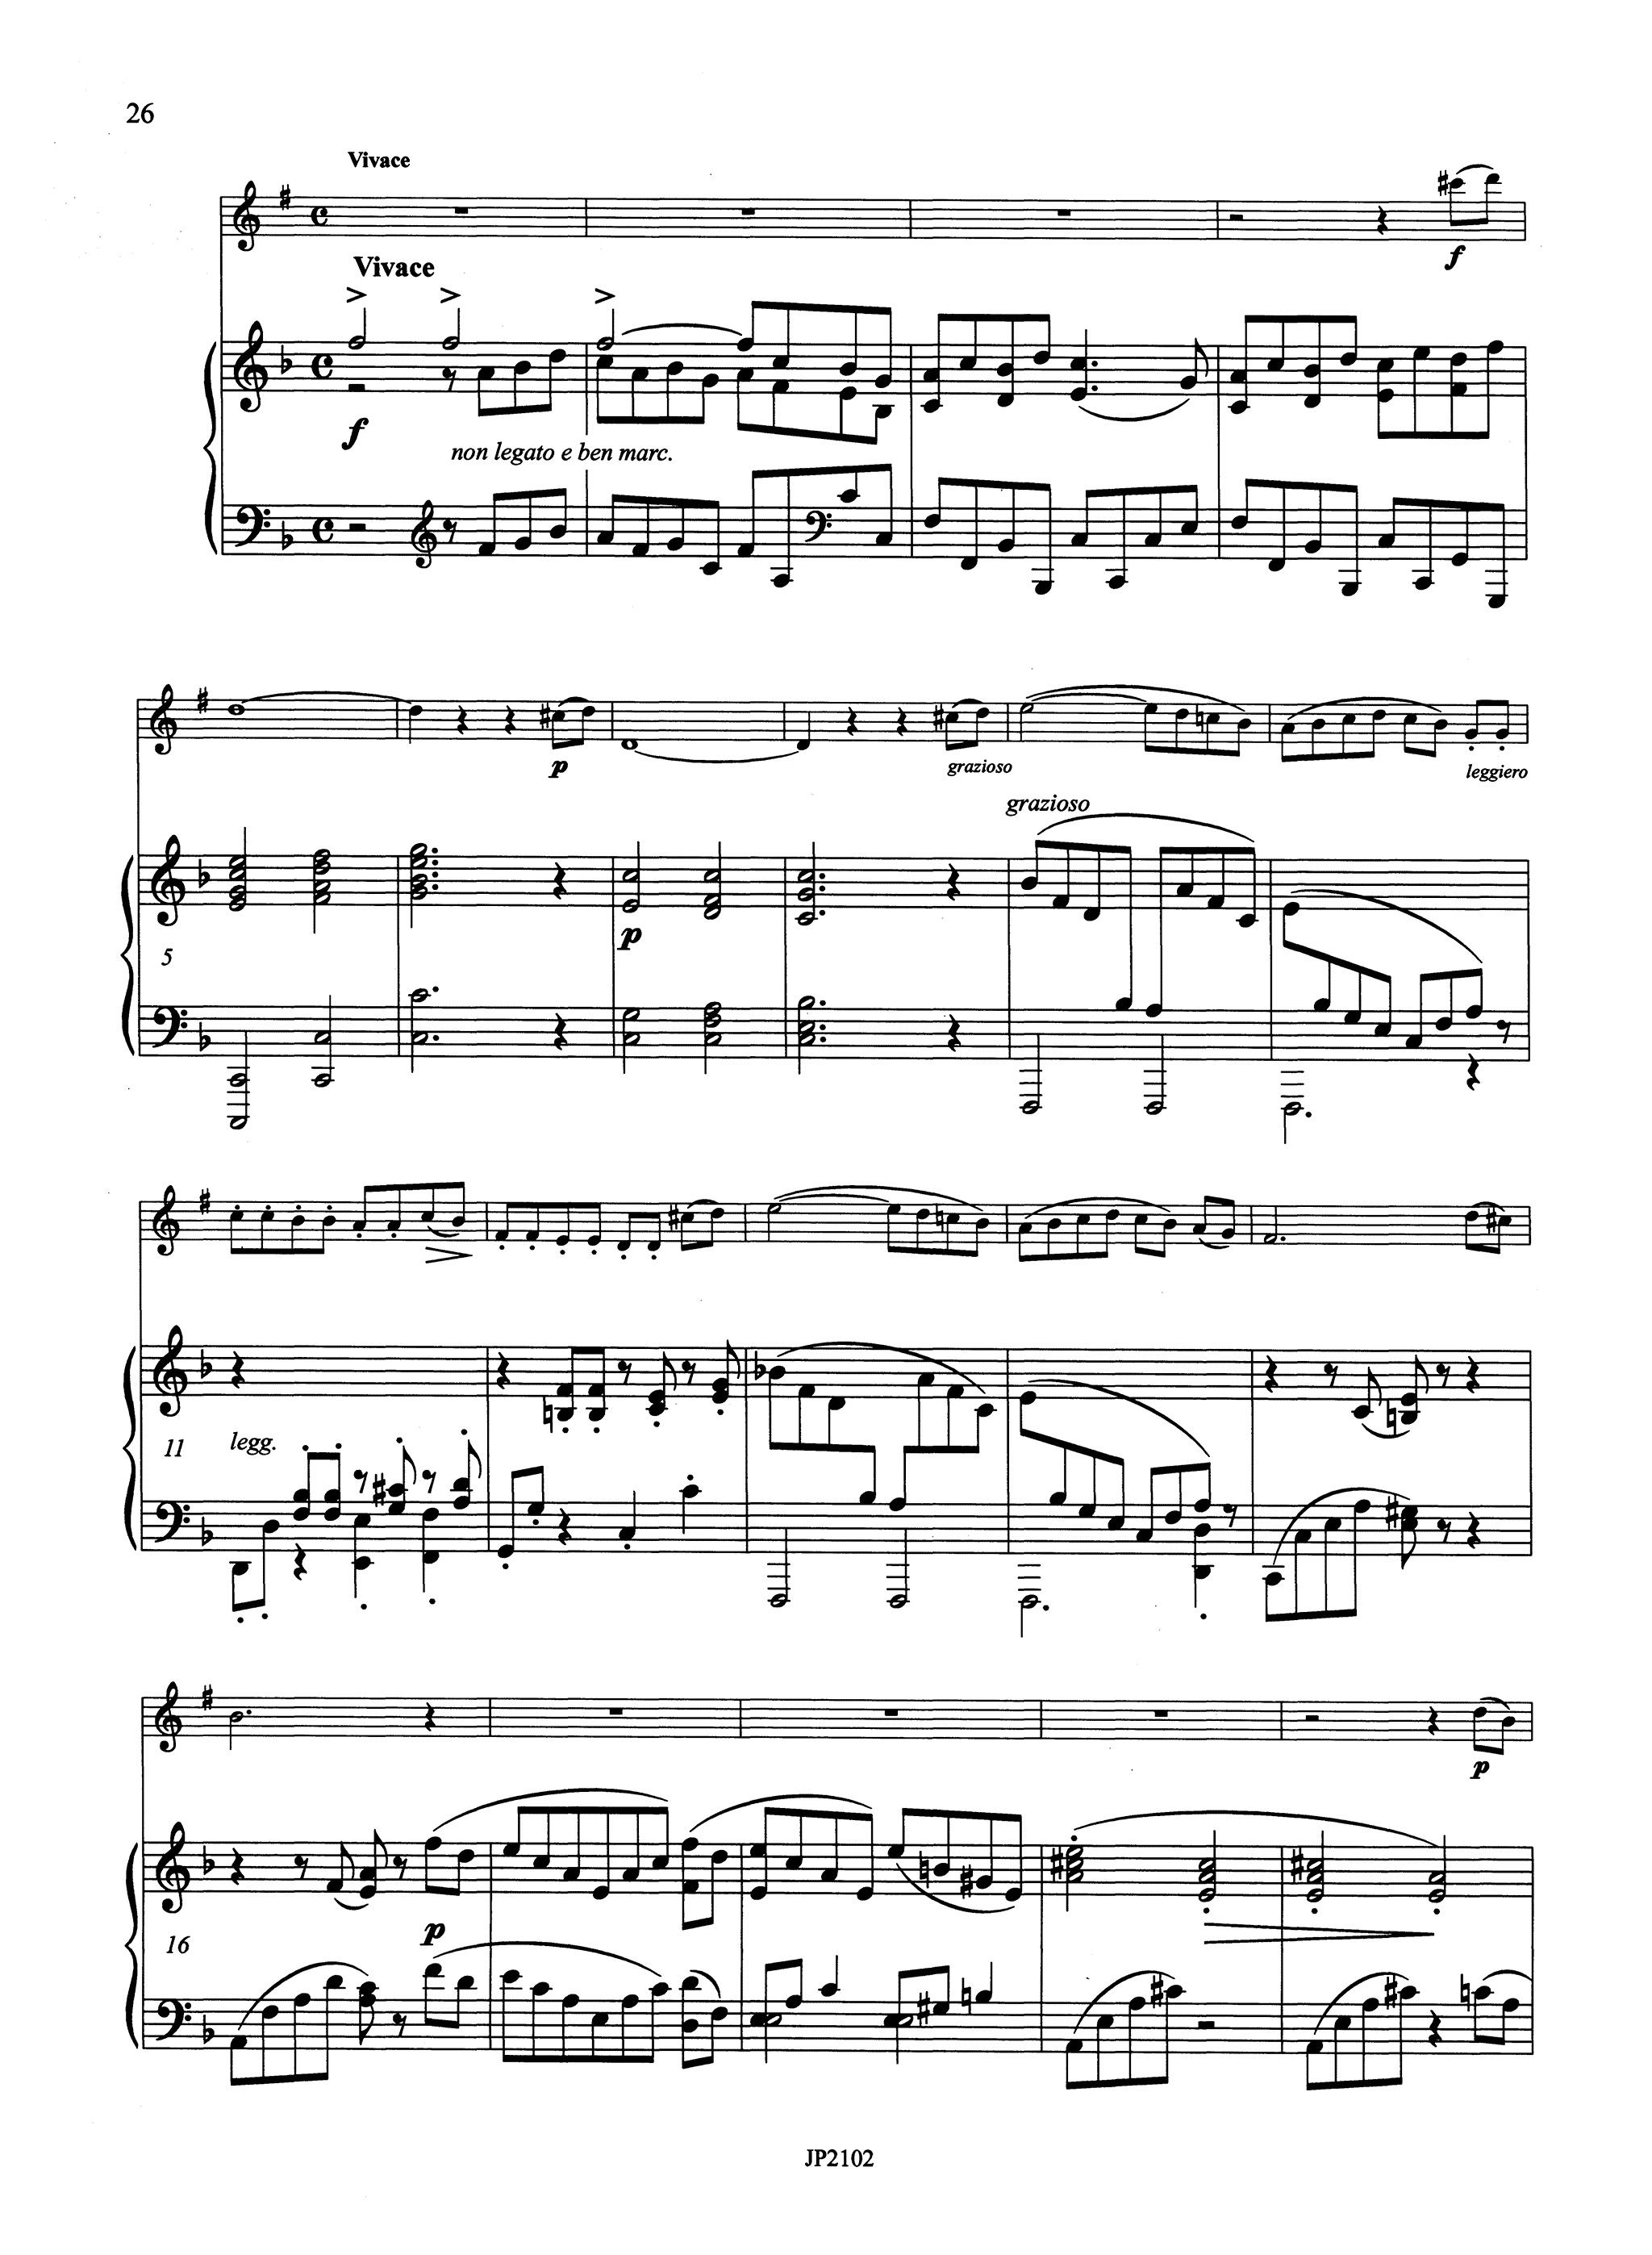 Brahms Sonata in F Minor, Op. 120 No. 1 - Movement 4